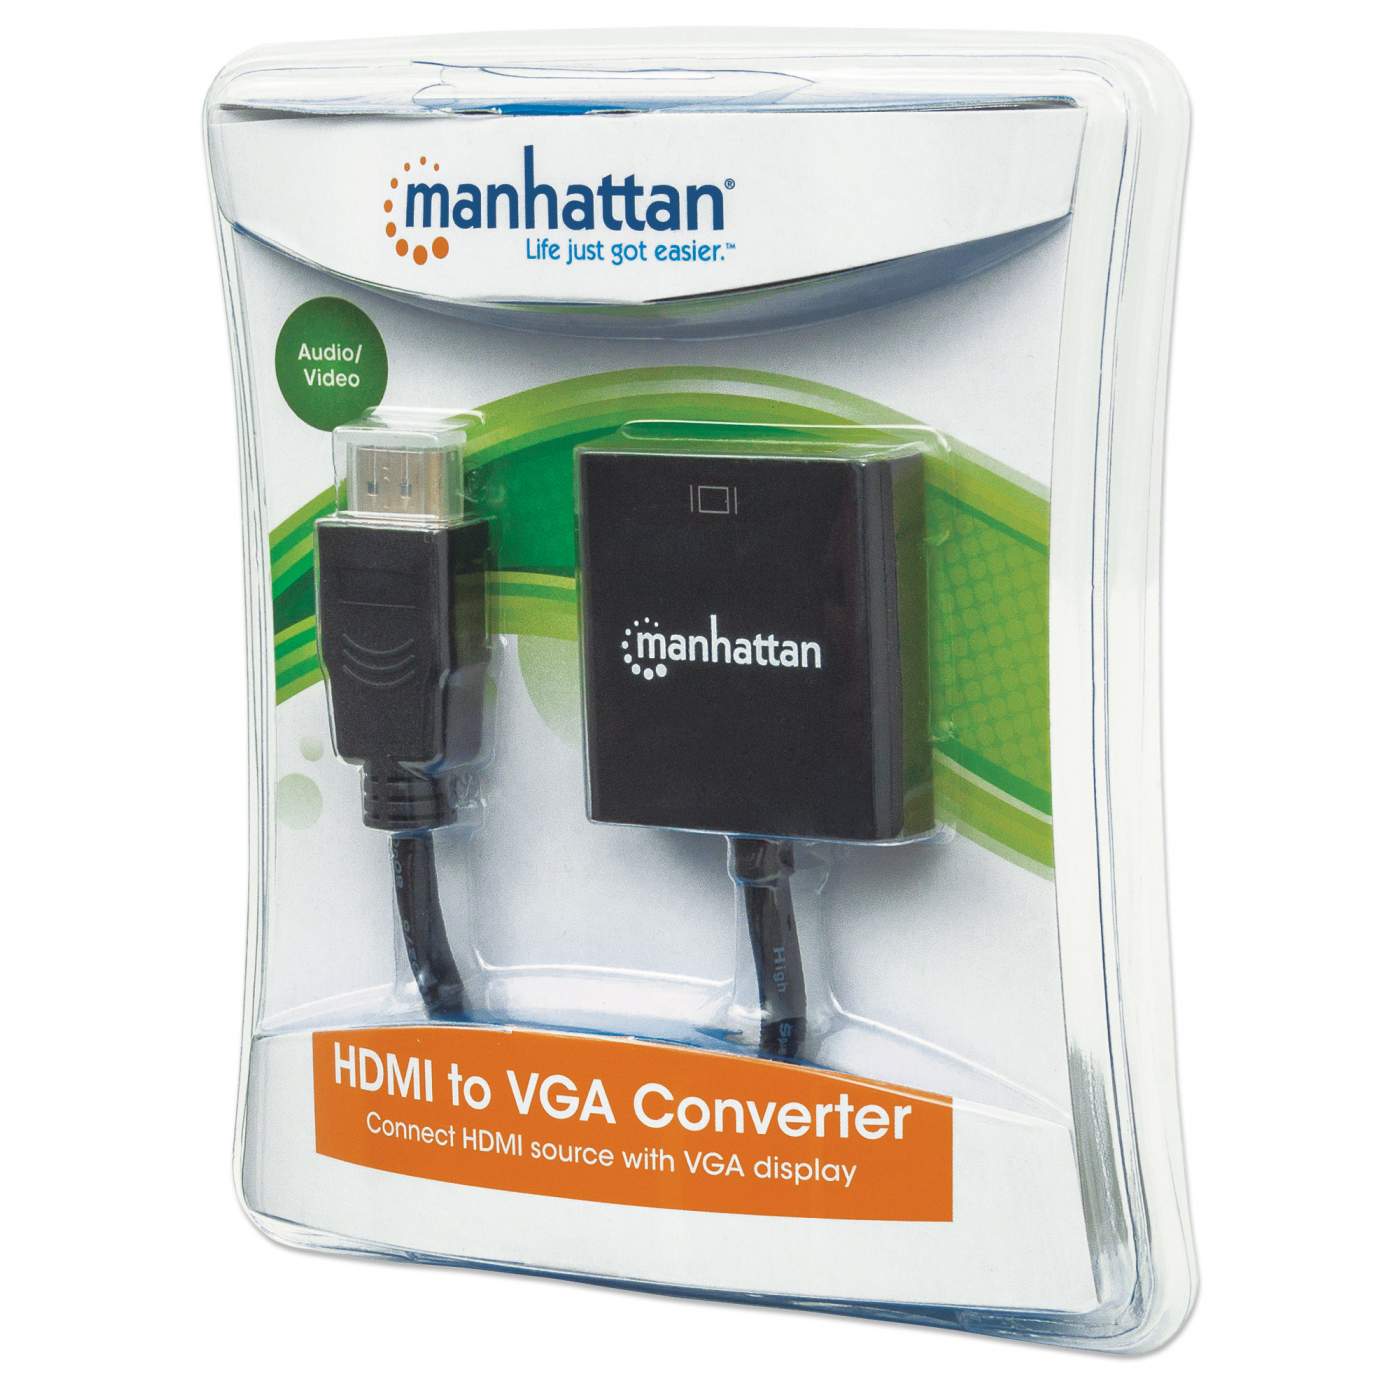 HDMI to VGA Converter Packaging Image 2